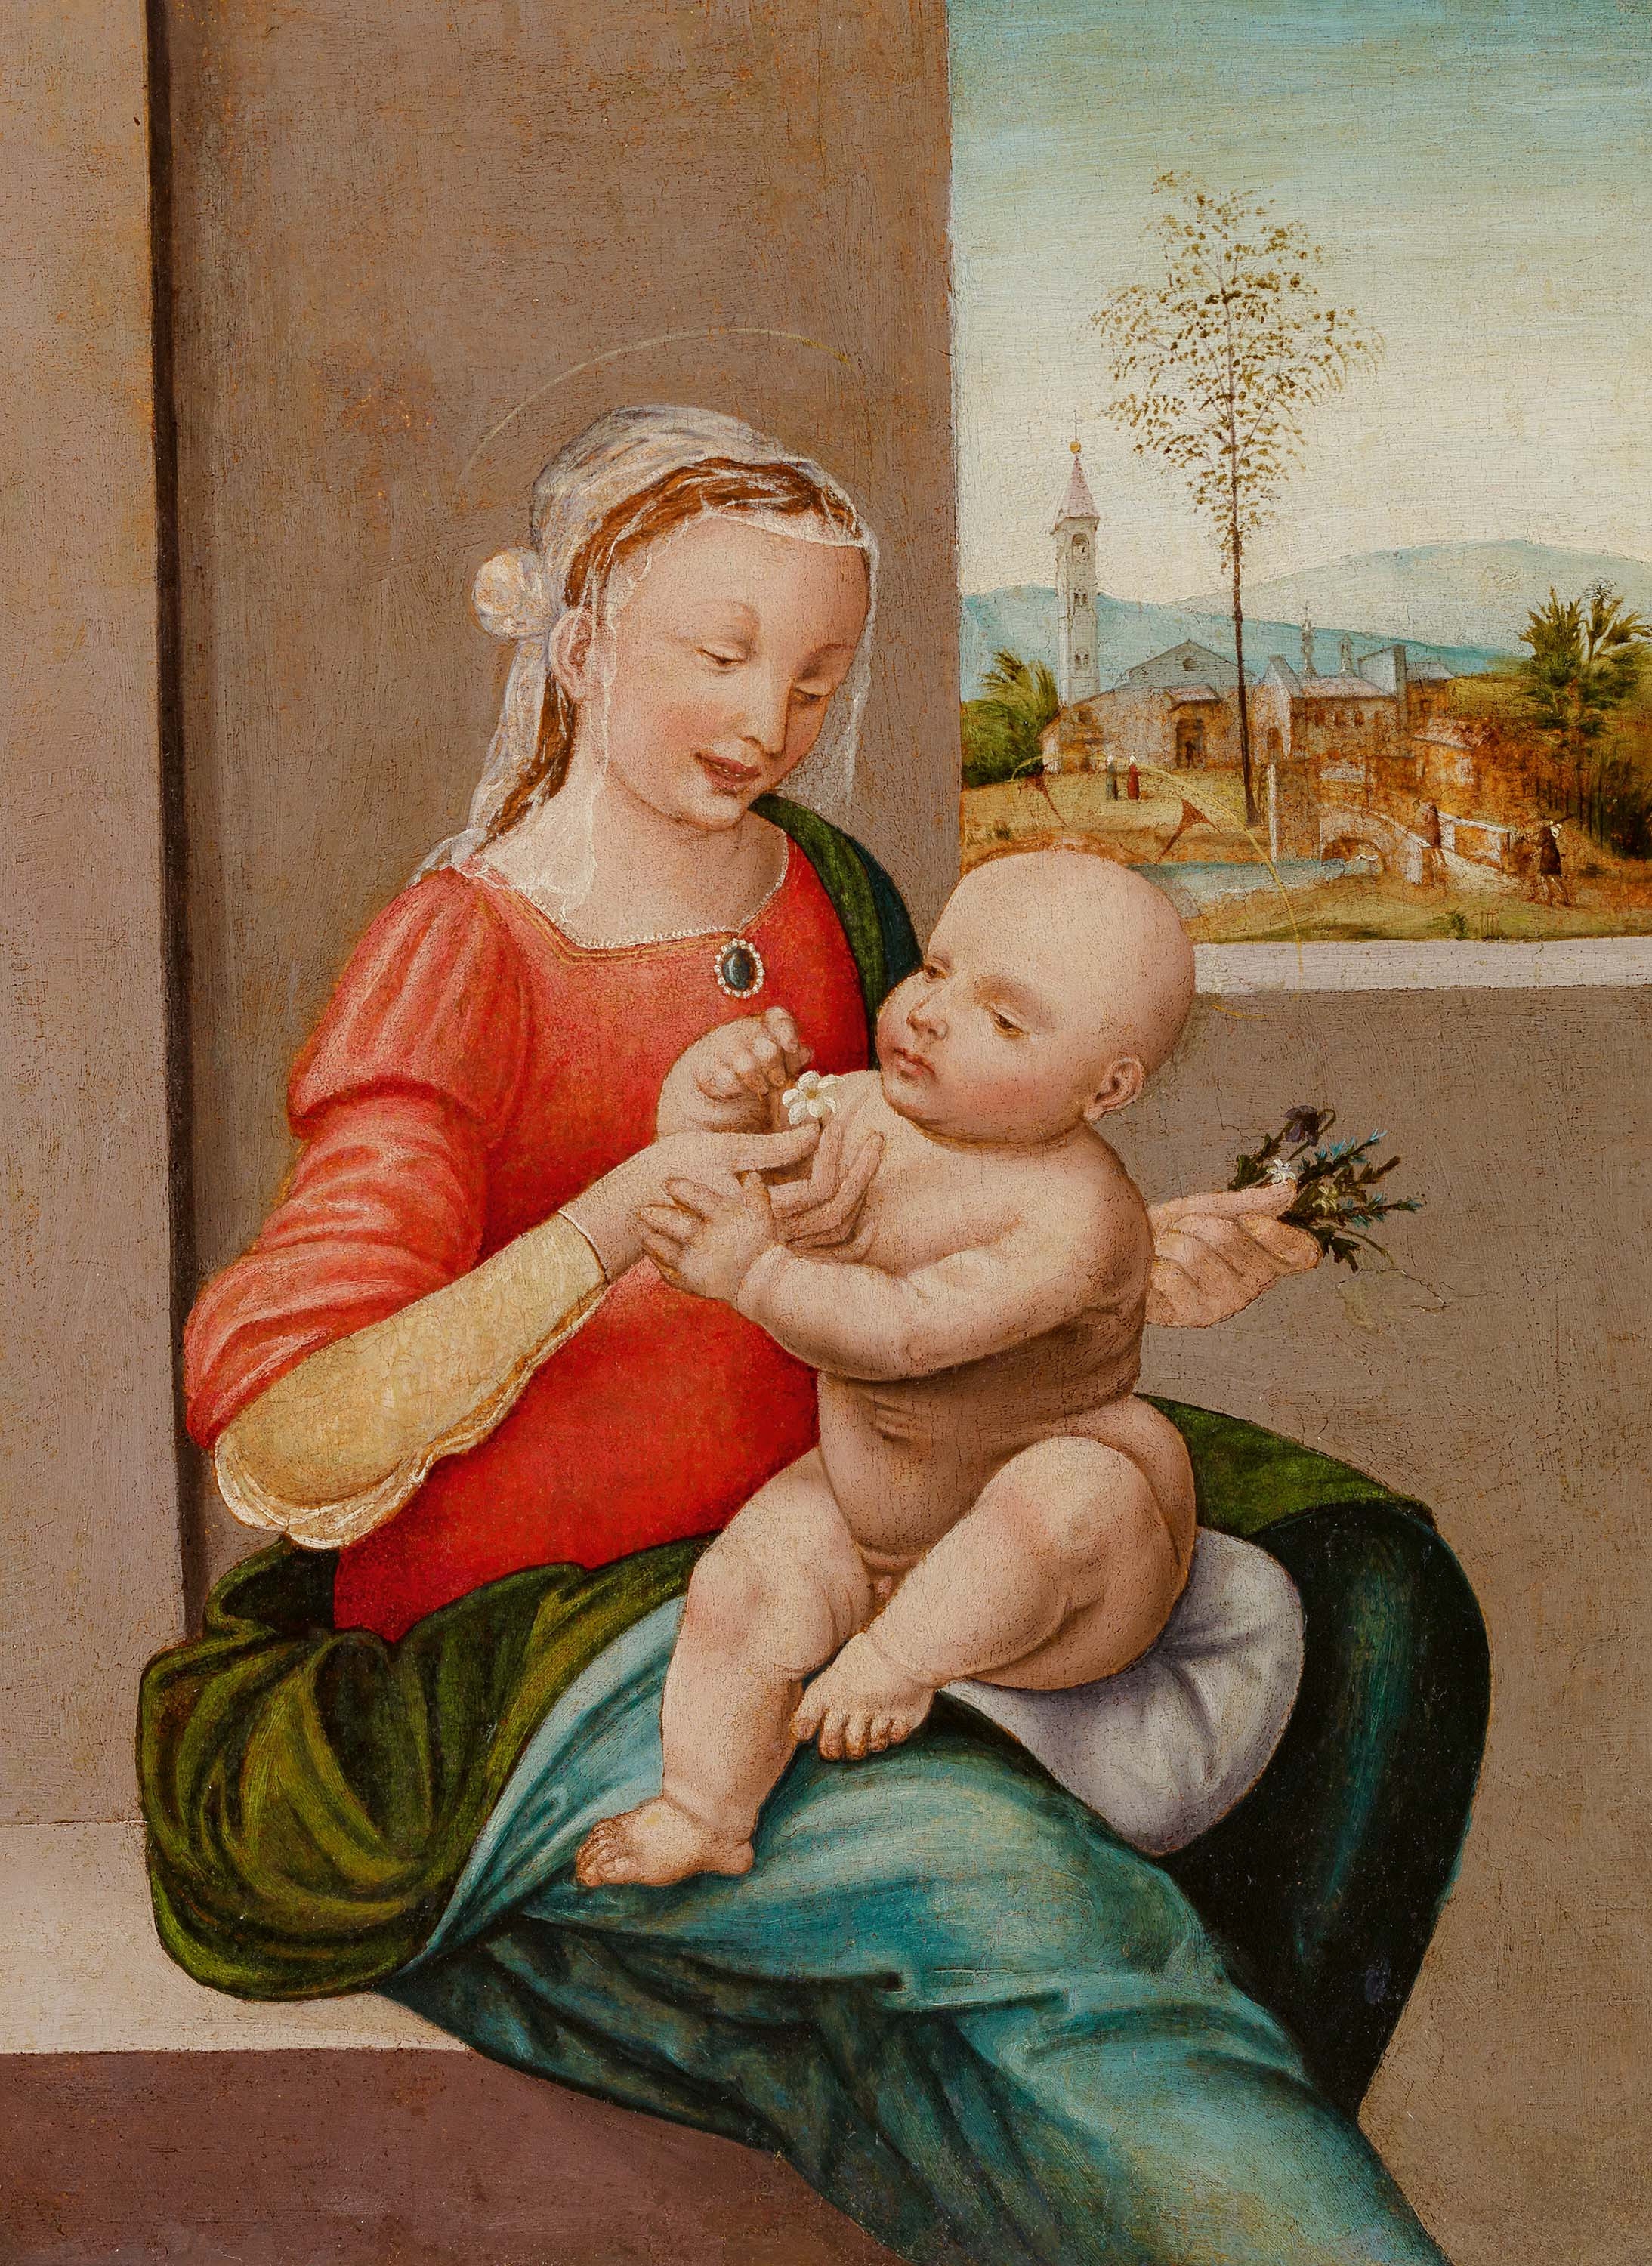 Virign and Child. by Leonardo da Vinci